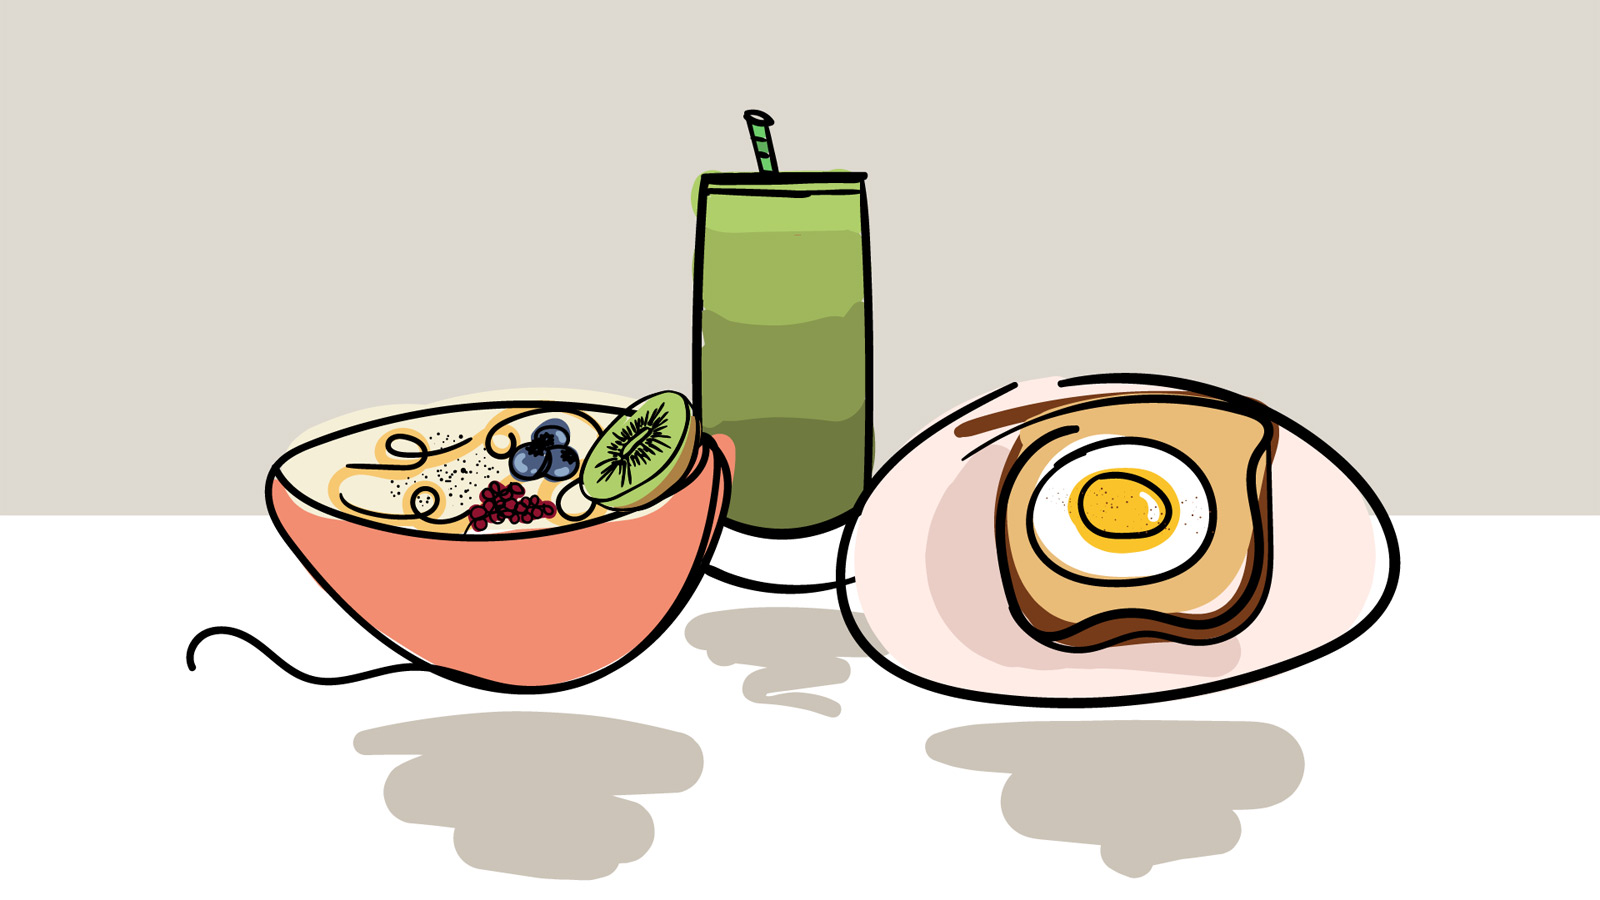 A cartoon of a summer porridge, a green smoothie and an egg on toast